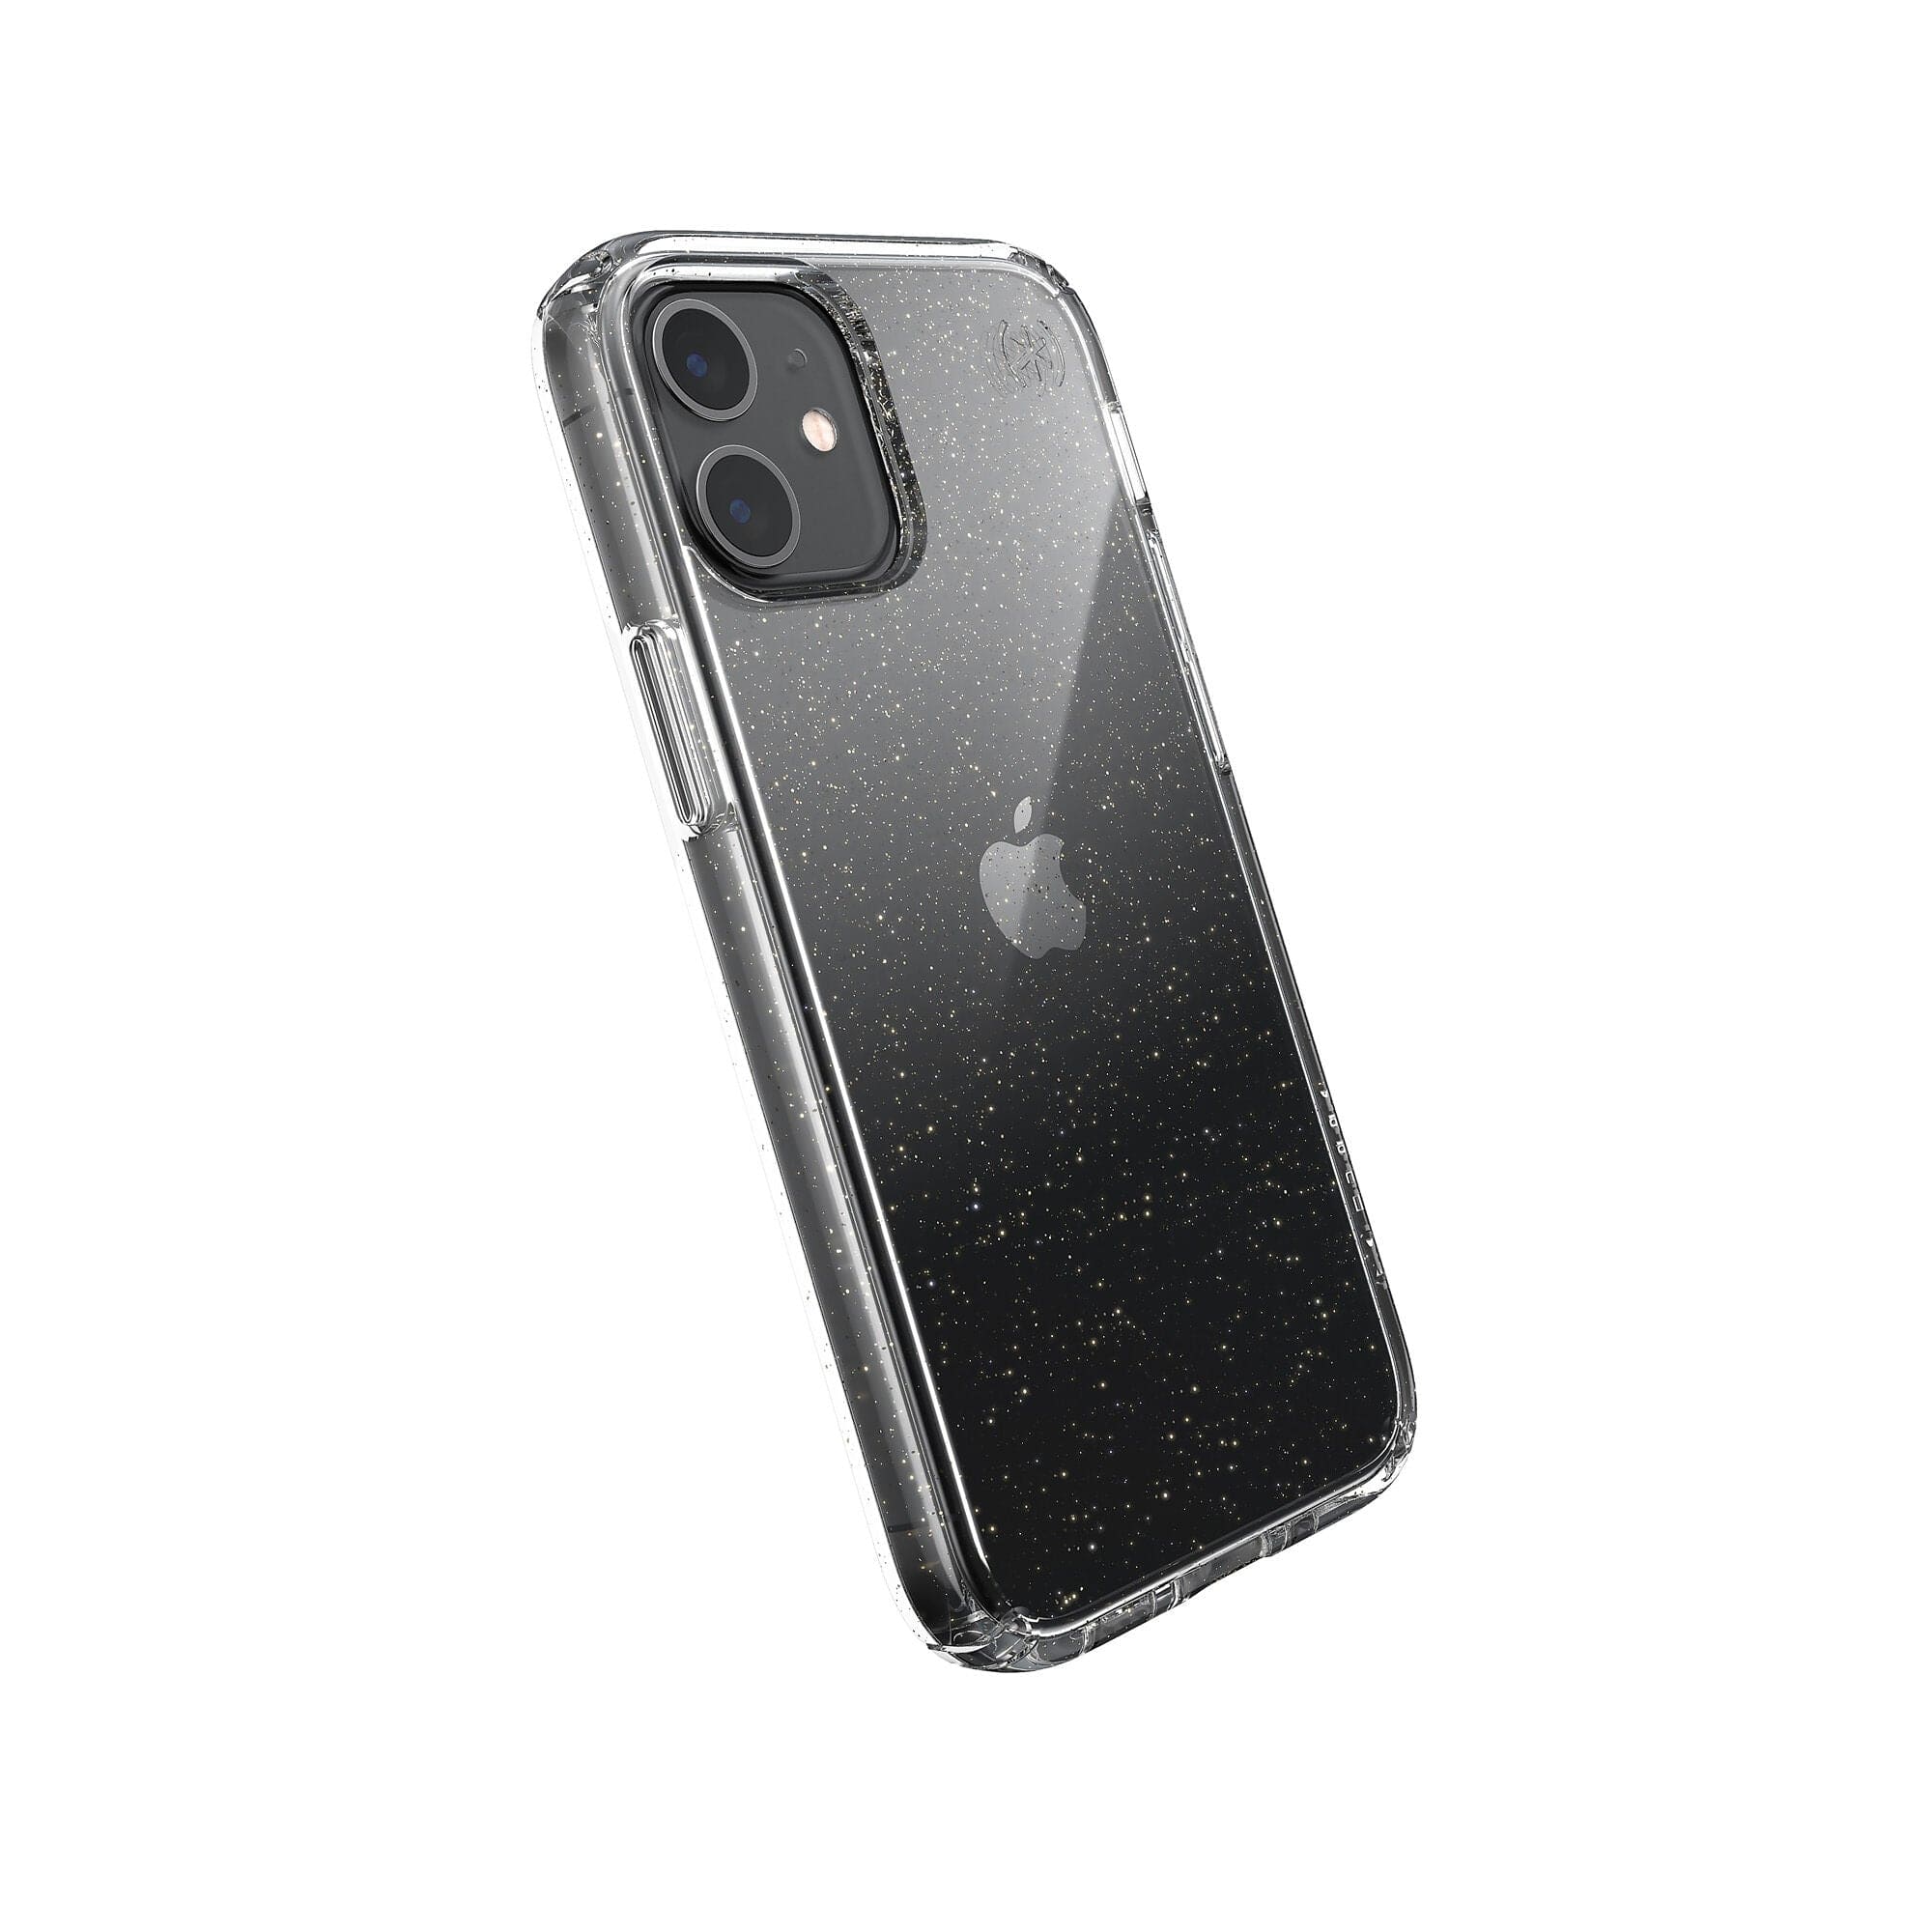 Speck Presidio Perfect-Clear with Glitter iPhone 12 mini Cases Best iPhone  12 mini - $44.99